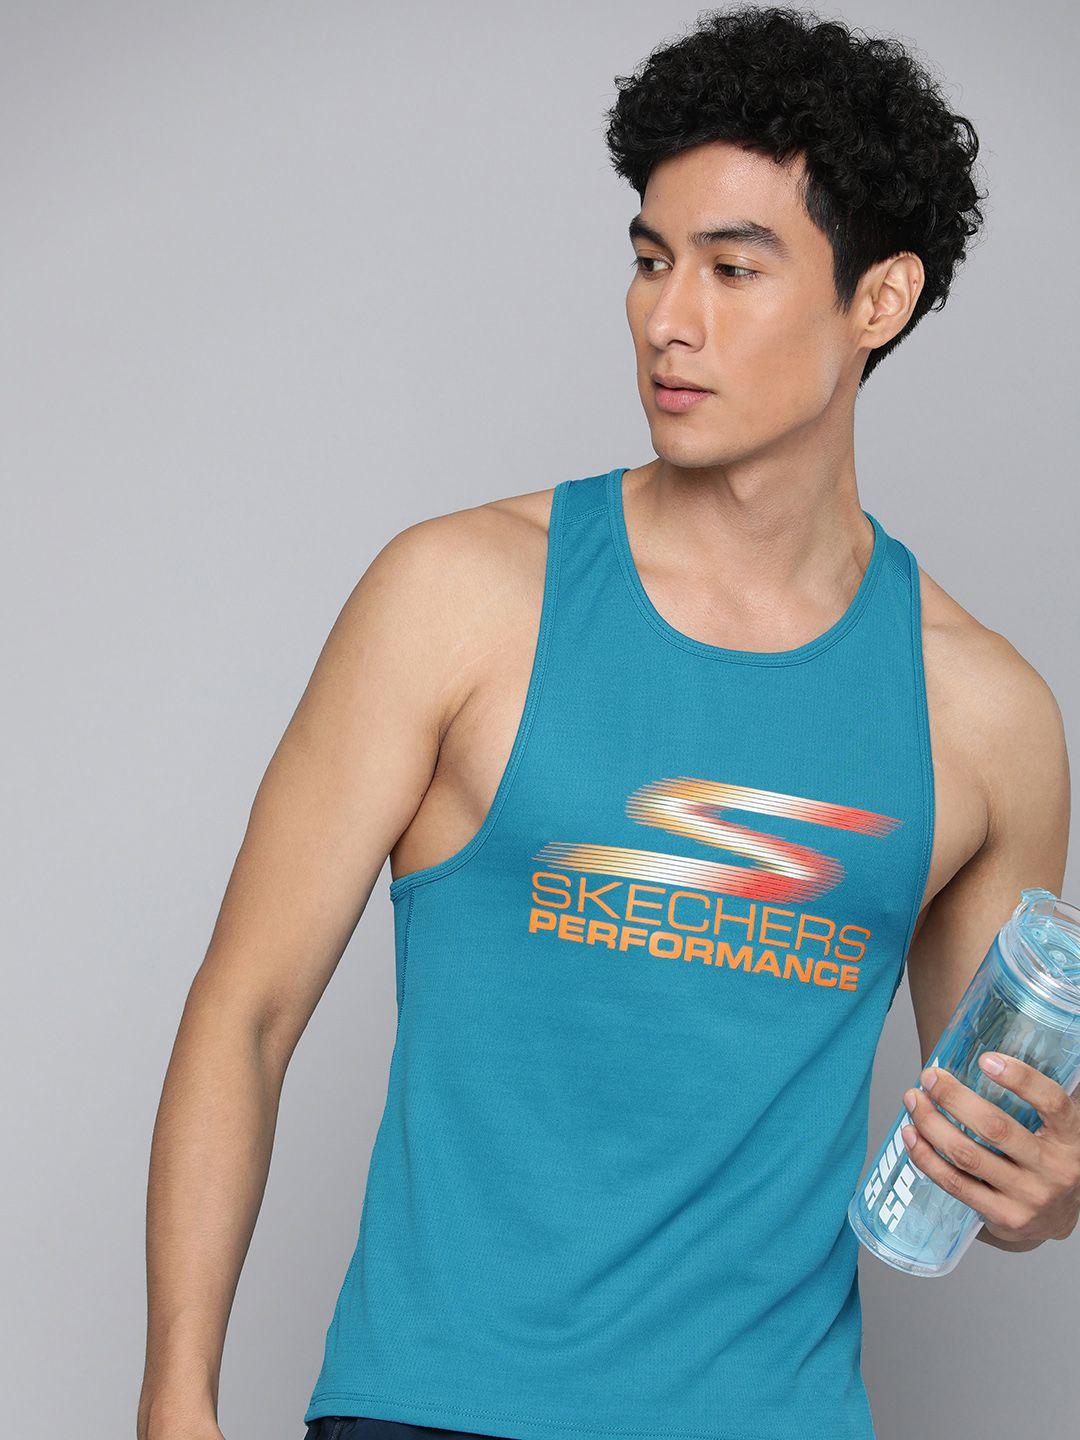 skechers brand logo printed elite singlet sleeveless sports t-shirt